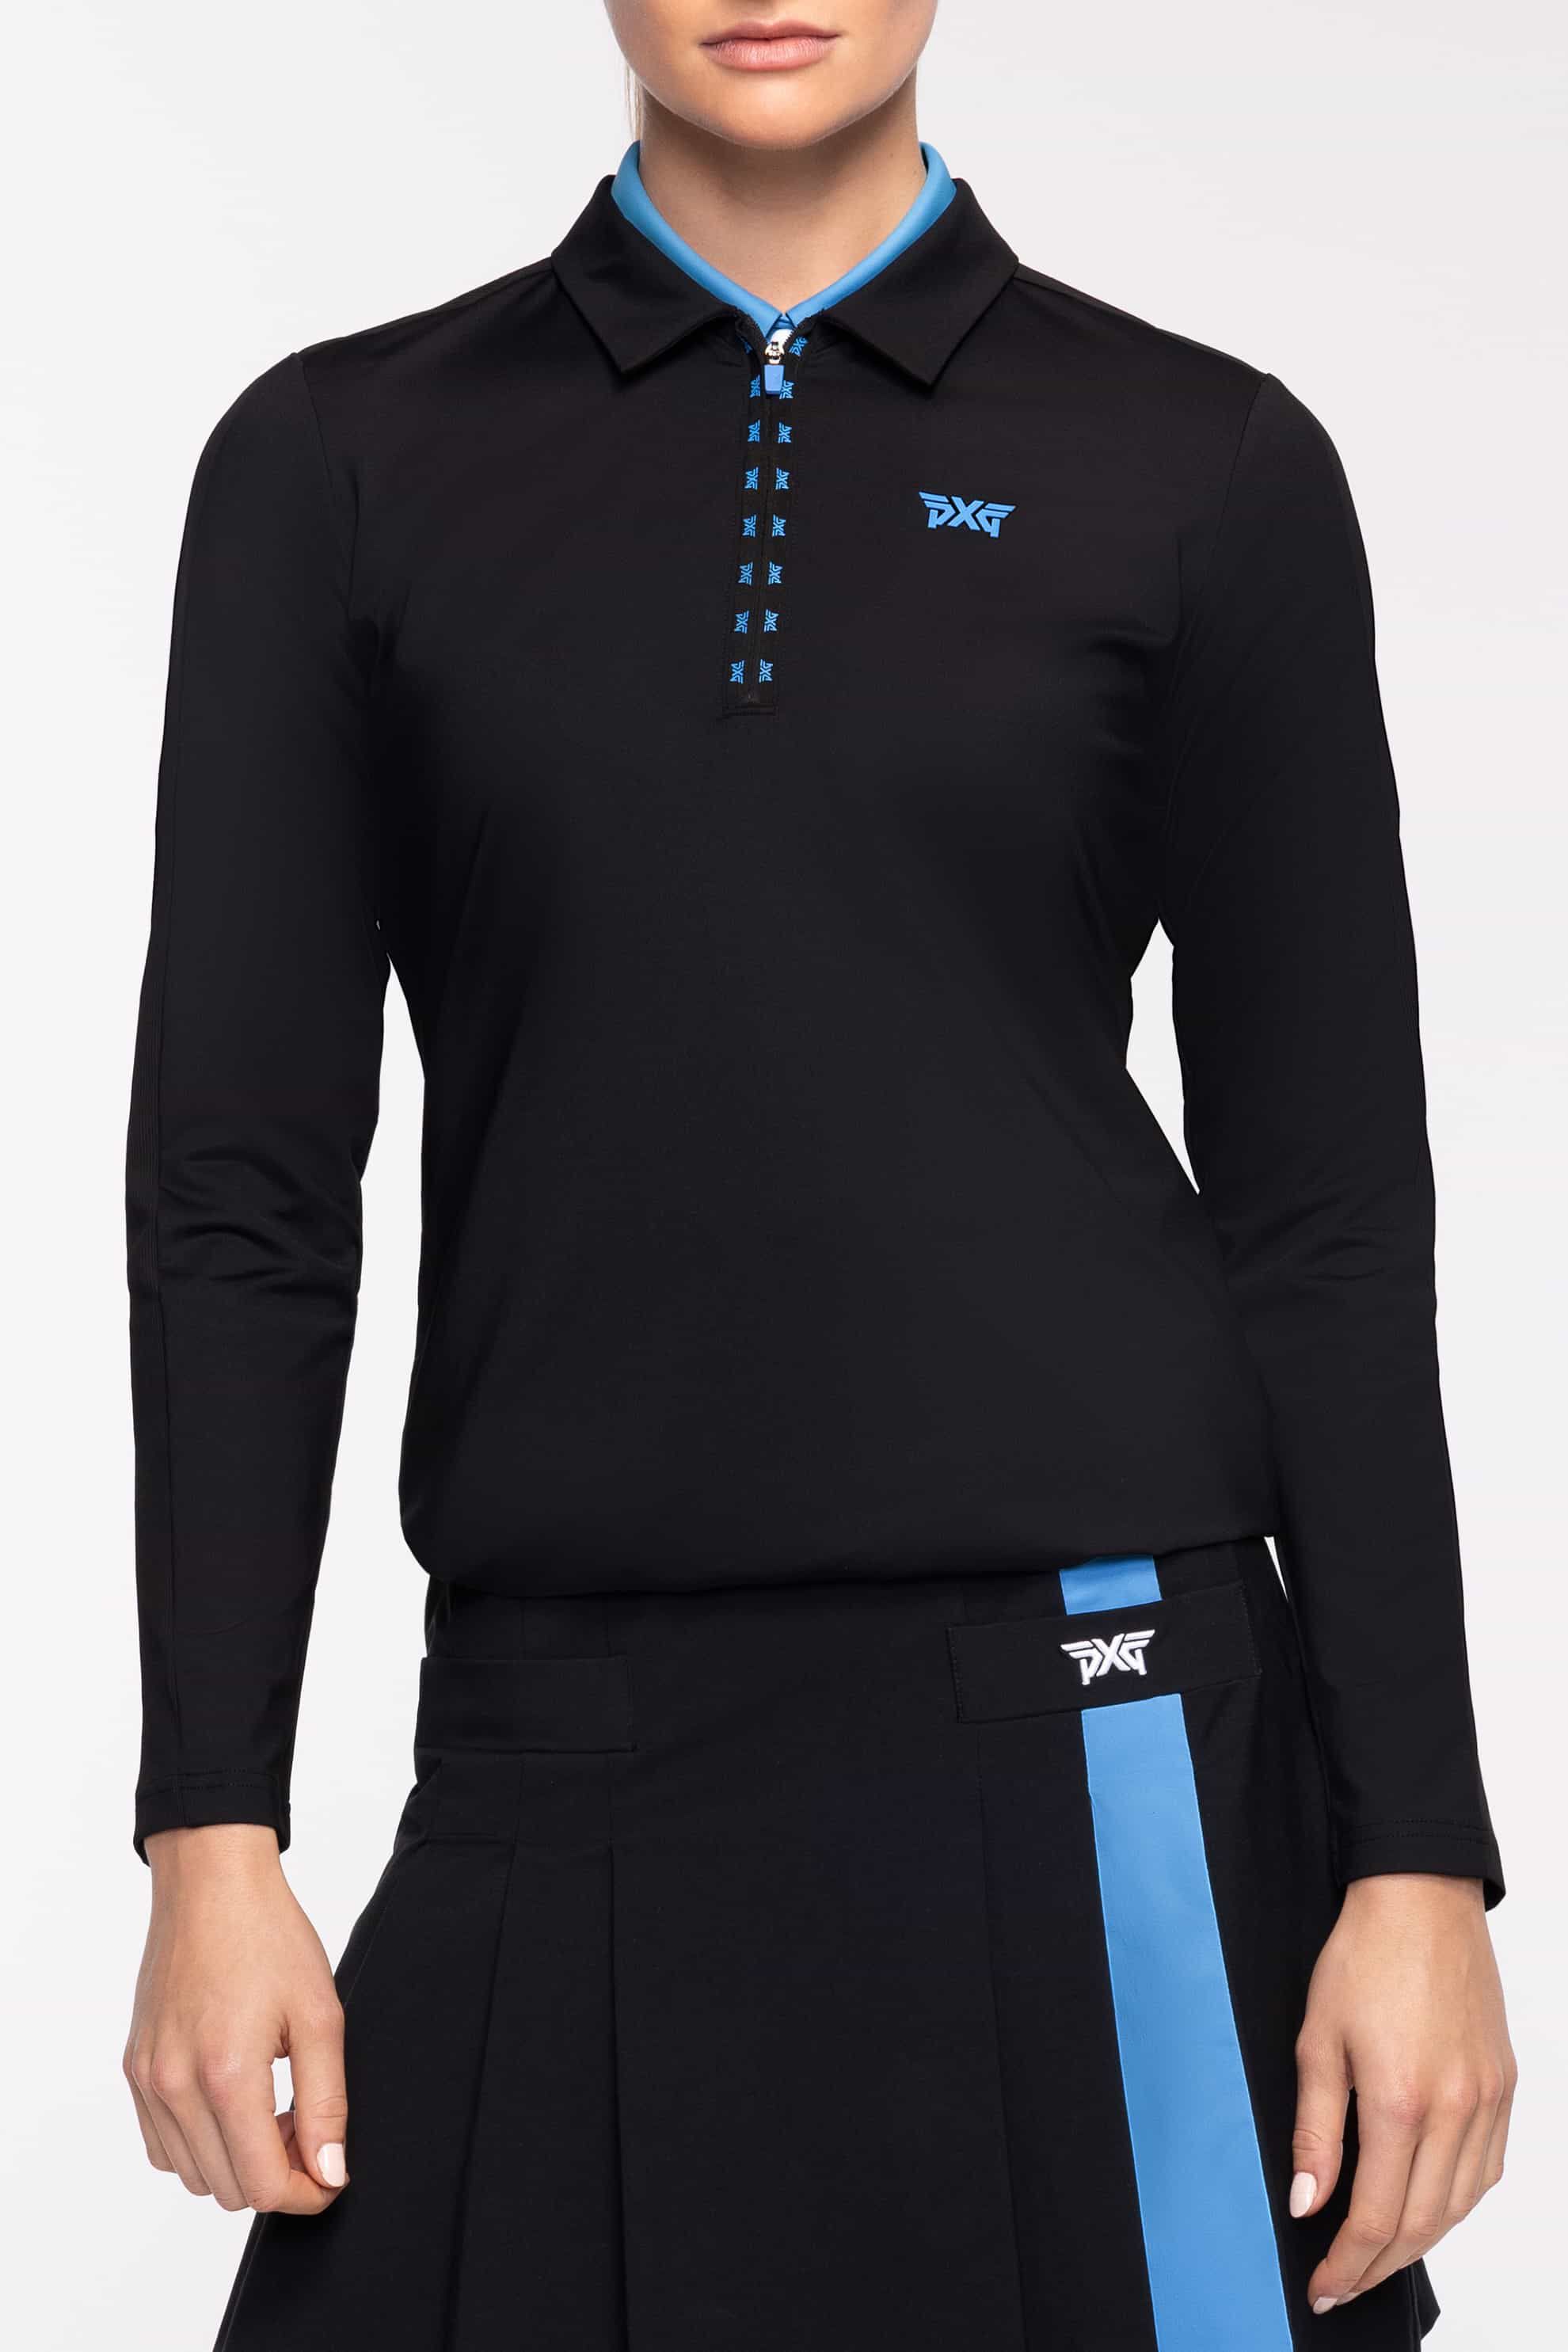 Shop Women's Golf Shirts & Polos | PXG